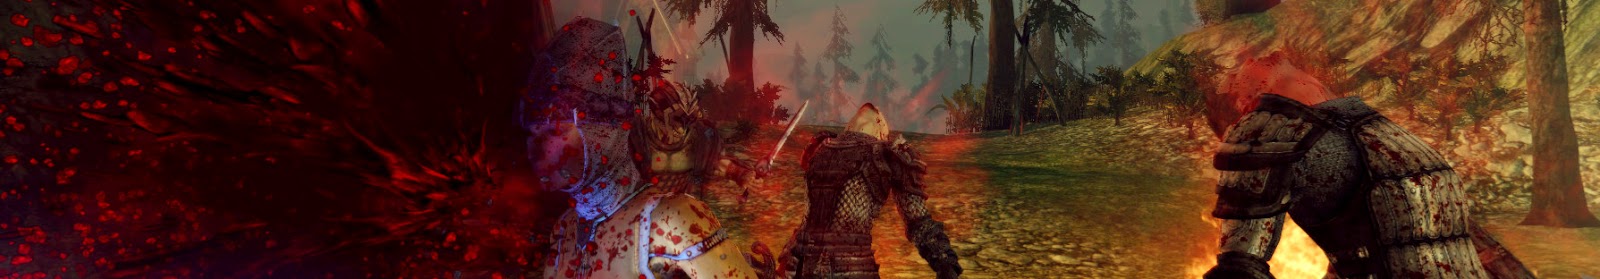 RPGamer - News Bulletin - Feature: Top Dragon Age: Origins Mods